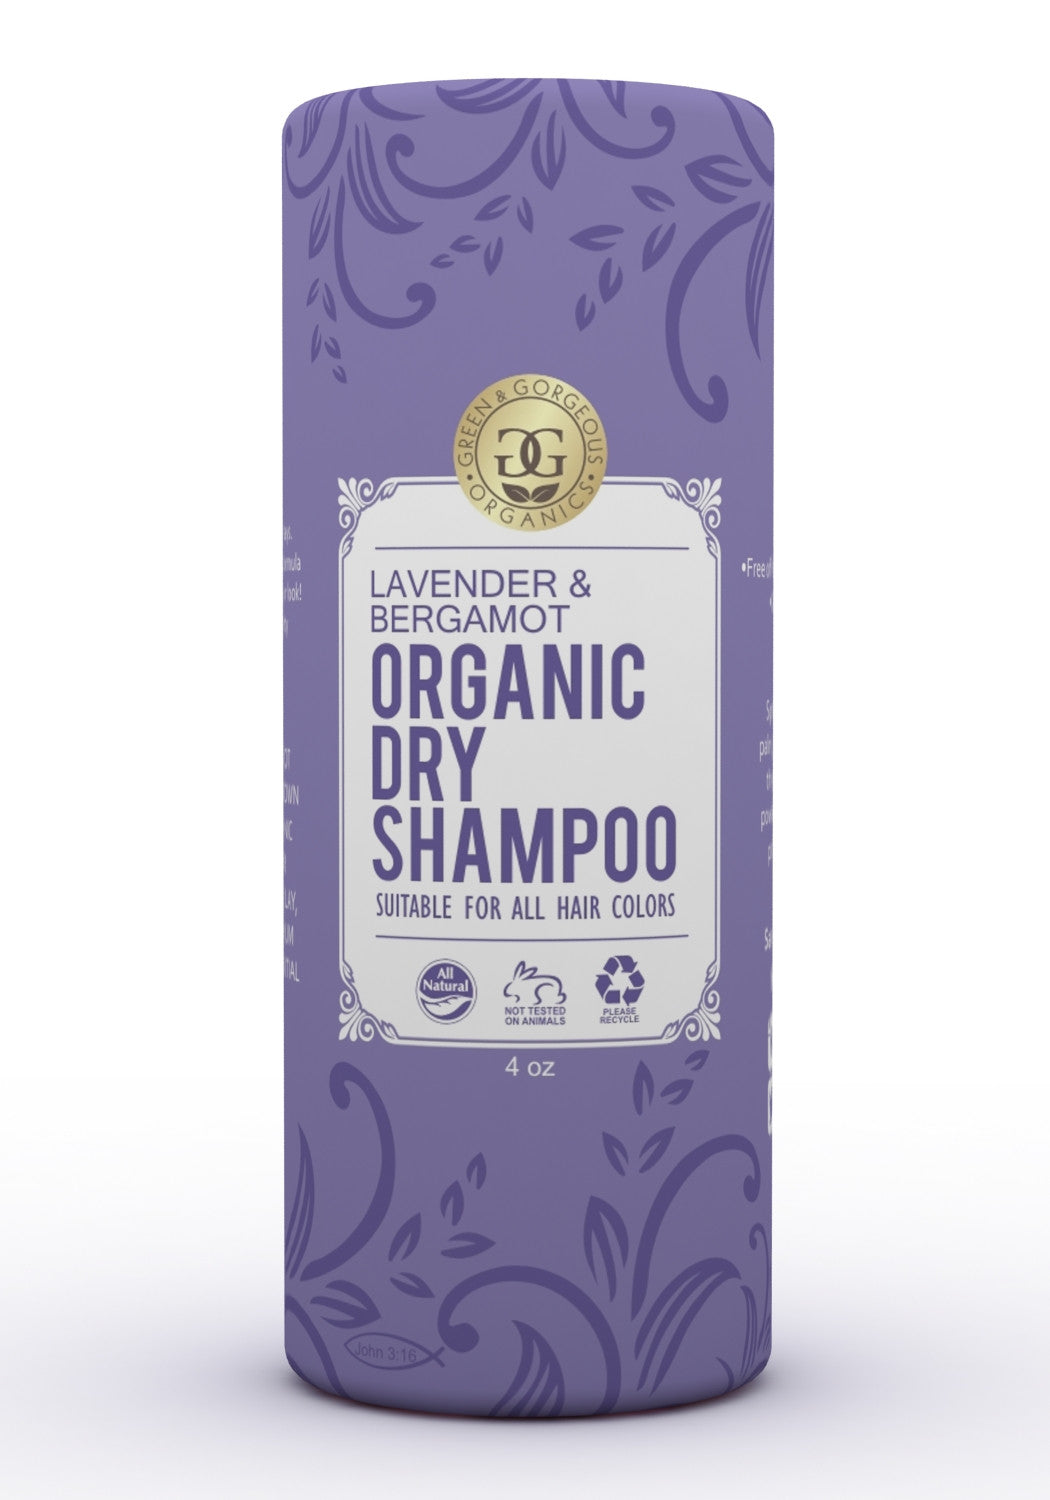 Organic Dry Shampoo Powder Lavender and Bergamot - Travel Size